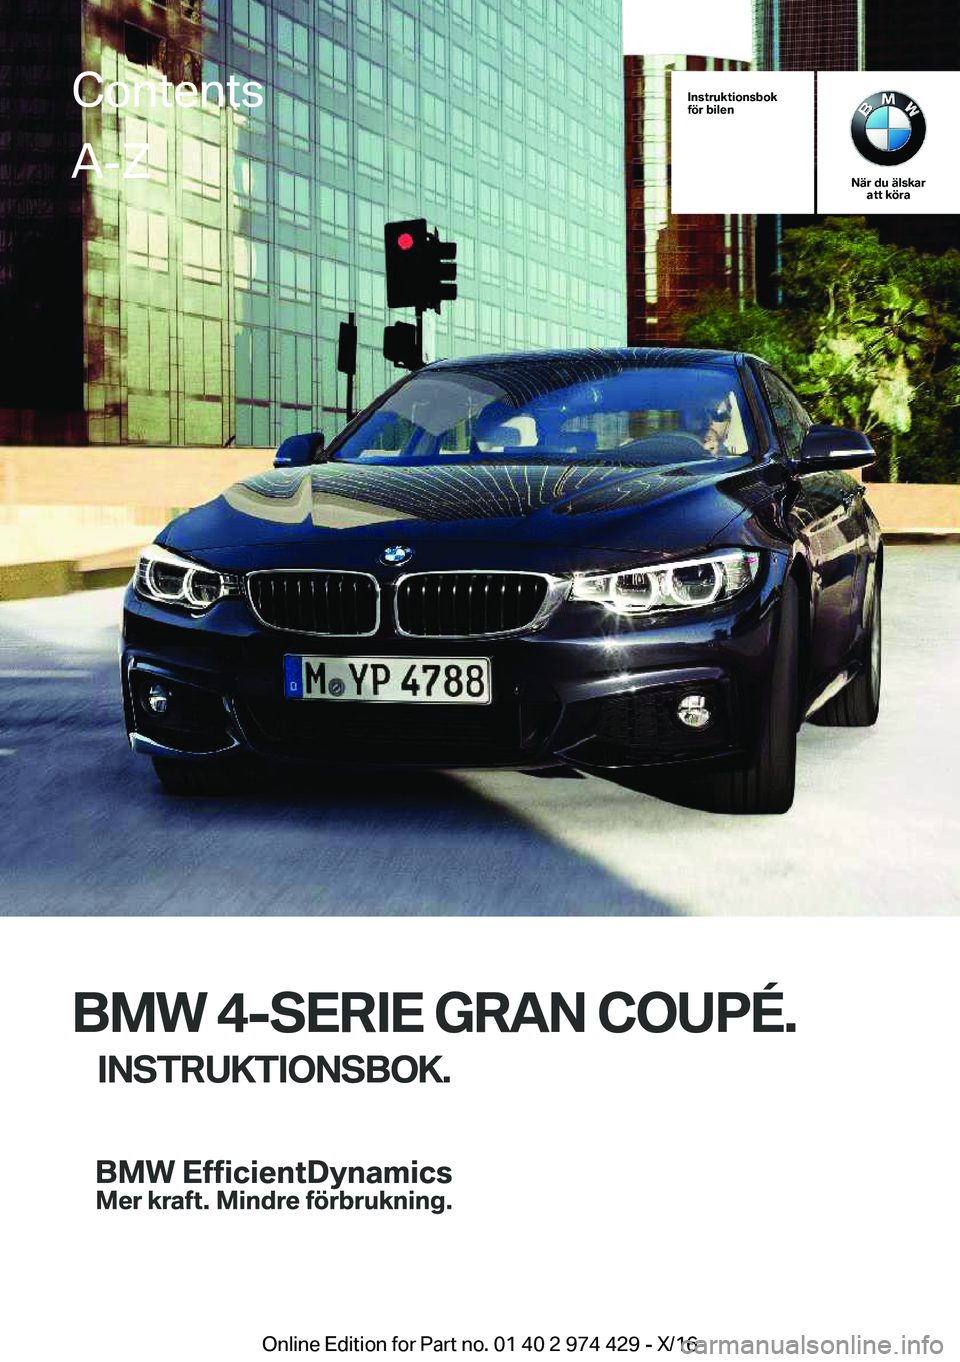 BMW 4 SERIES GRAN COUPE 2017  InstruktionsbÖcker (in Swedish) �I�n�s�t�r�u�k�t�i�o�n�s�b�o�k
�f�